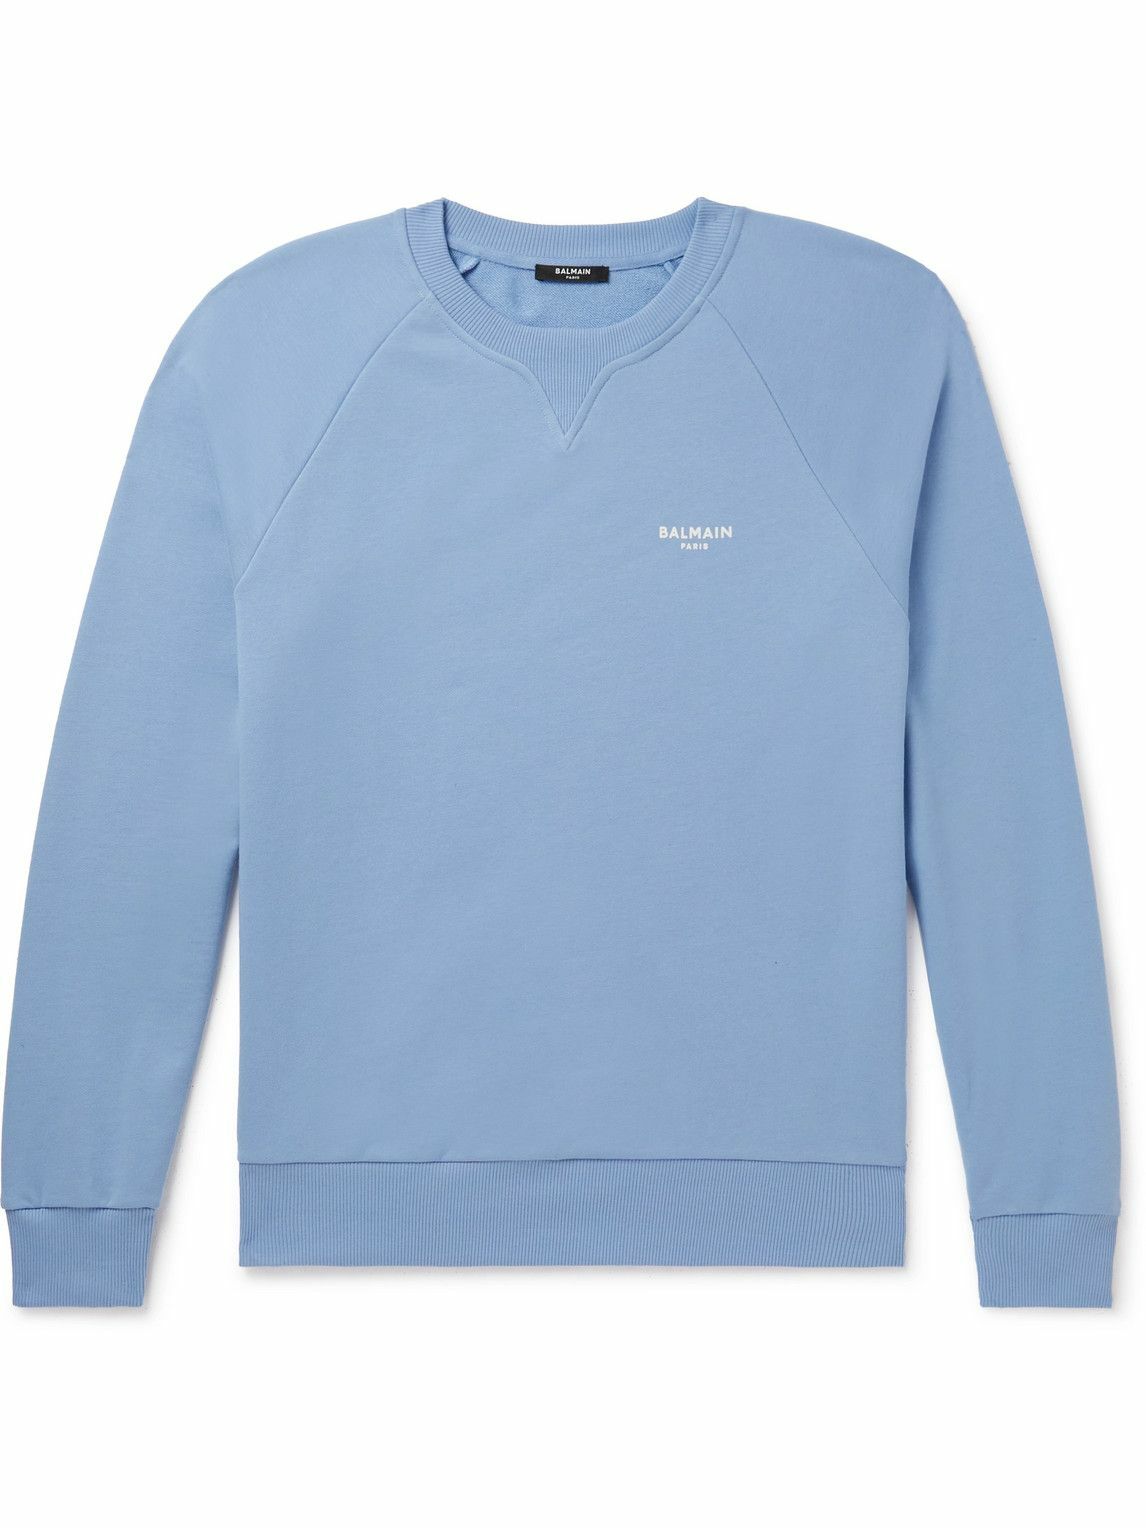 Balmain - Logo-Flocked Cotton-Jersey Sweatshirt - Blue Balmain